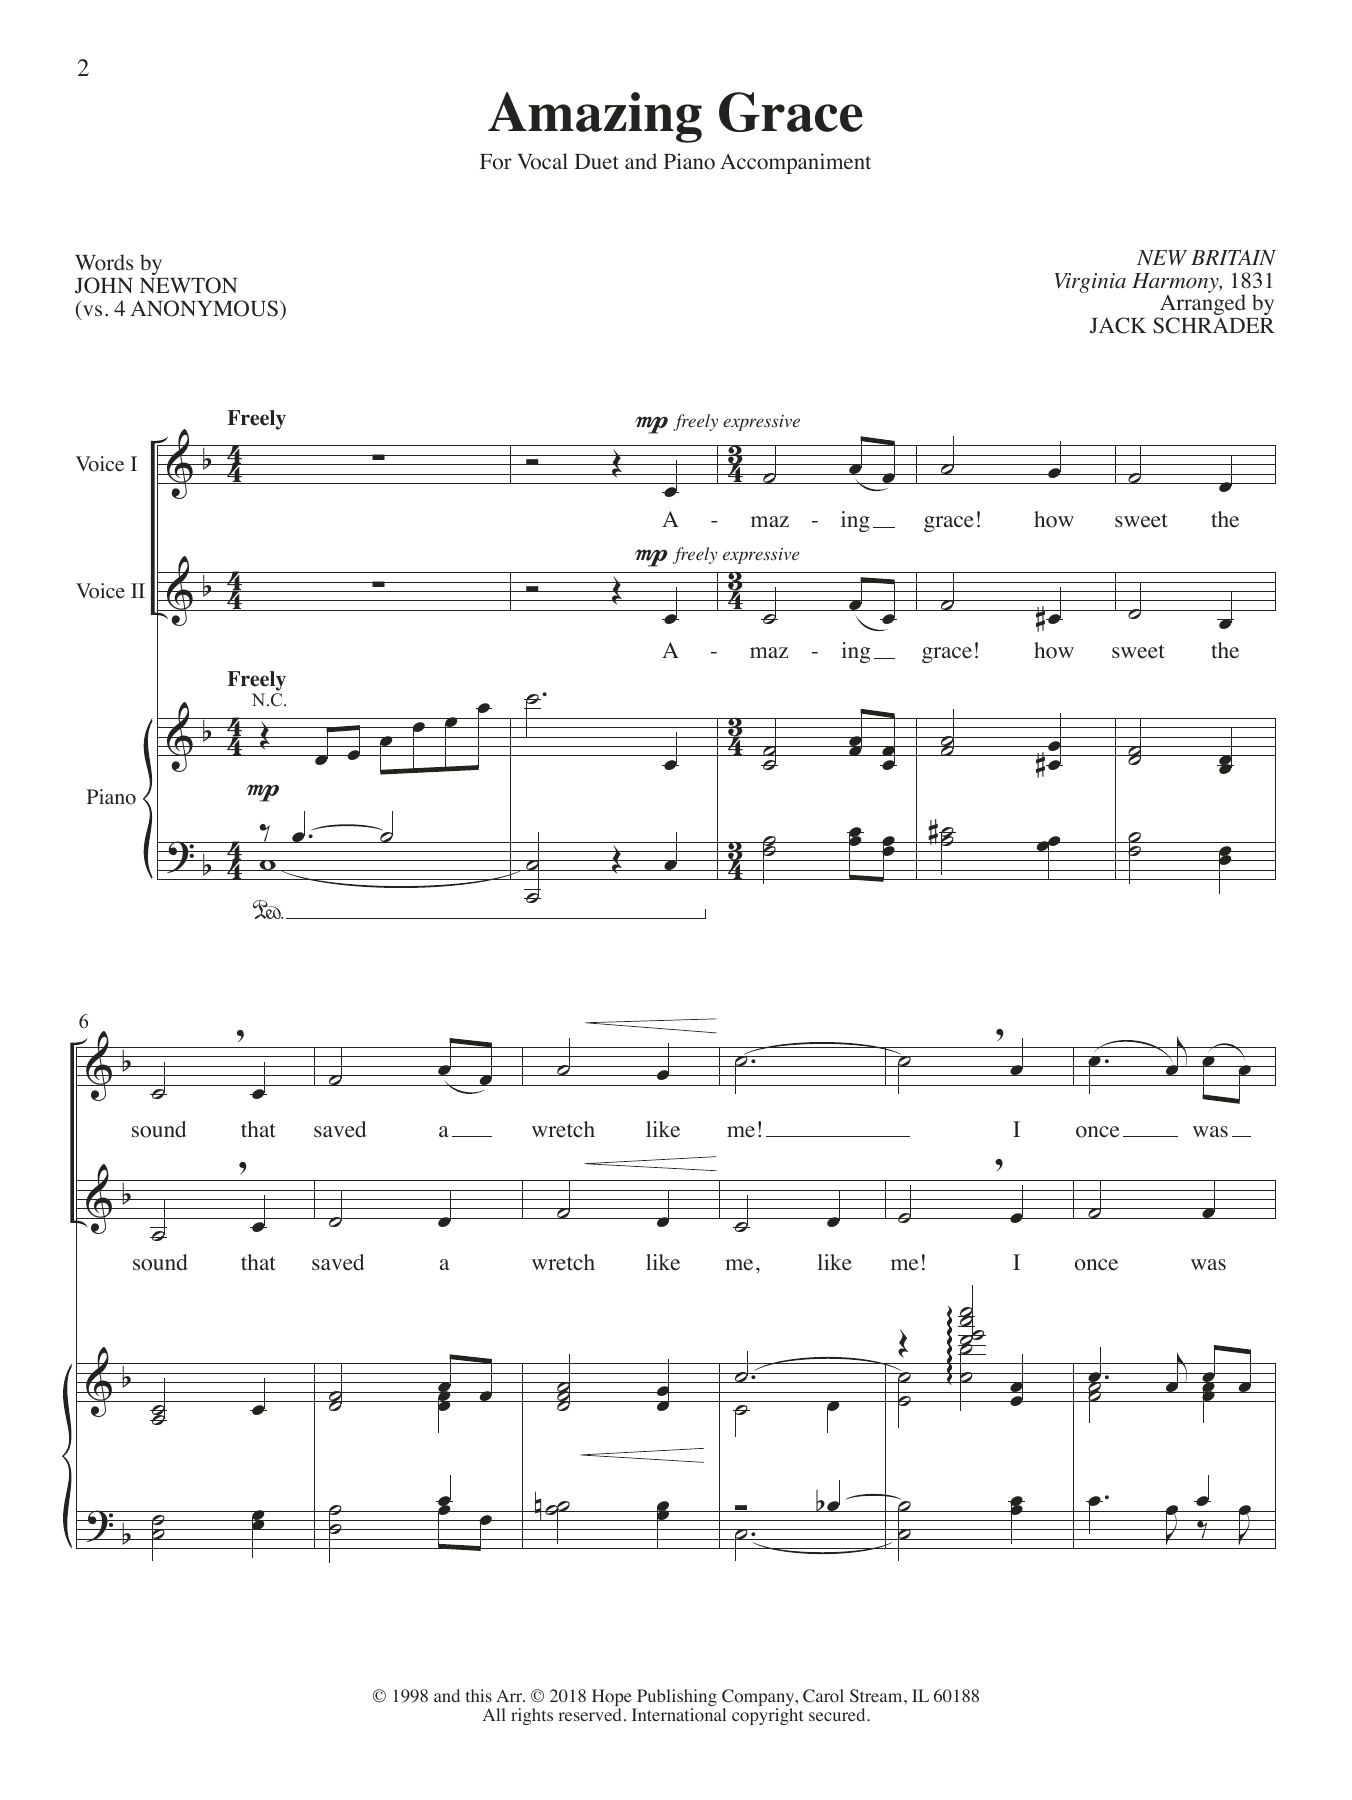 Download John Newton Essential Vocal Duets, Vol. III Sheet Music